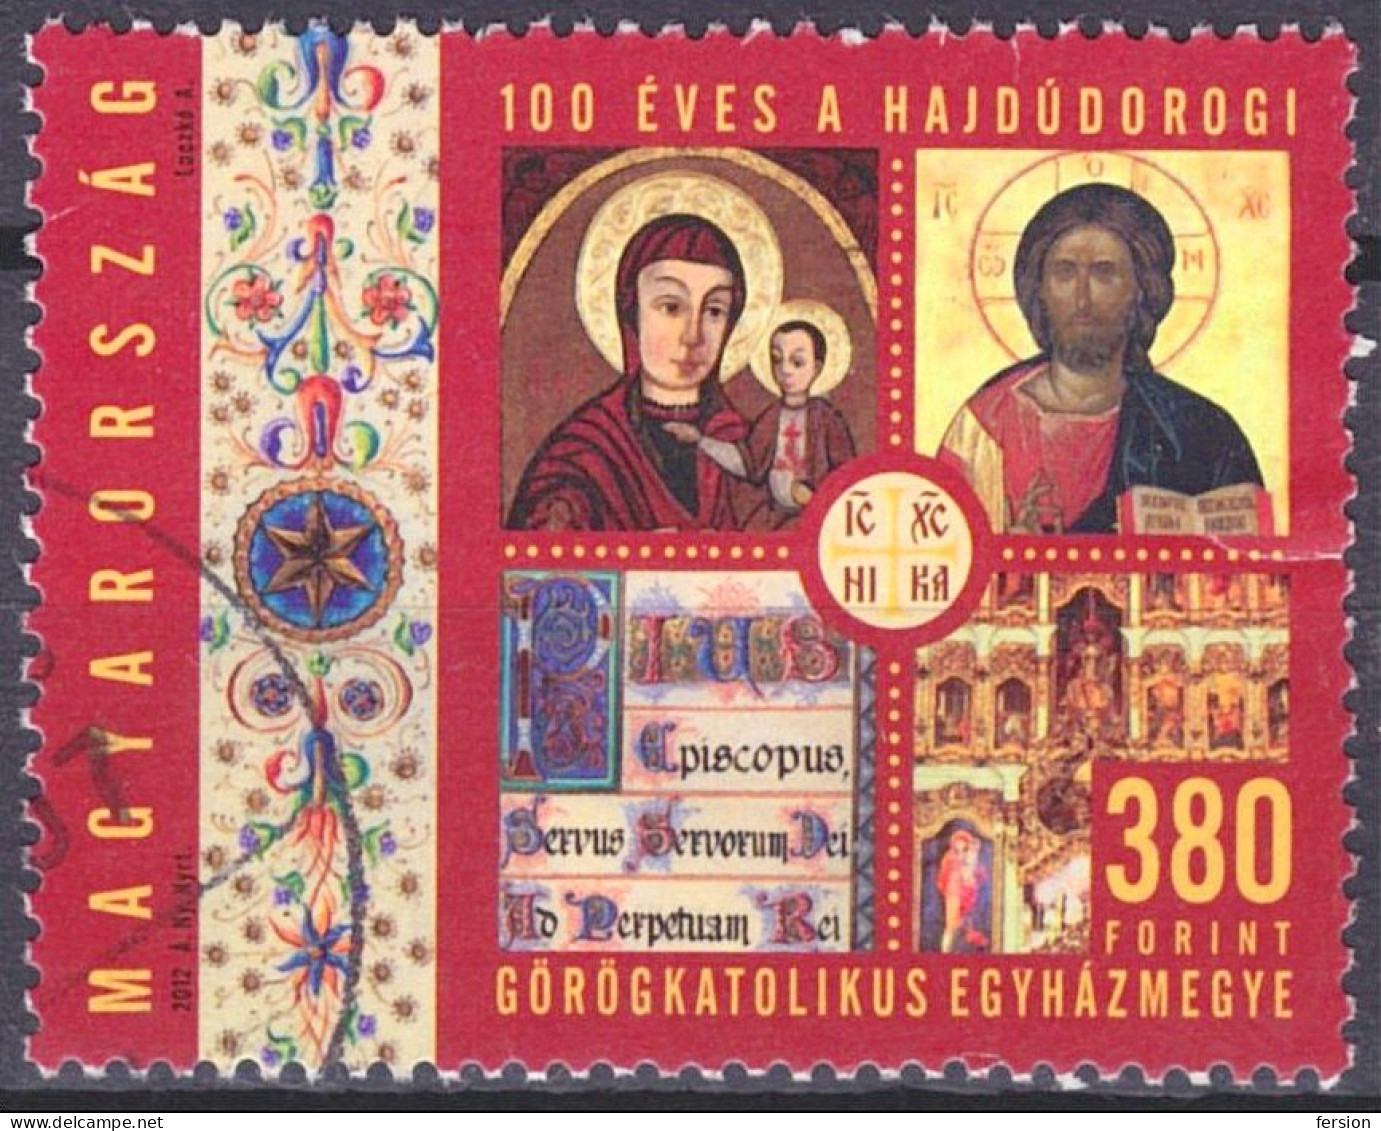 Orthodox Greek Catholic CHURCH Diocese In Hungary Hajdudorog / Icon Icons - Jesus - USED - Hungary 2012 - Religie